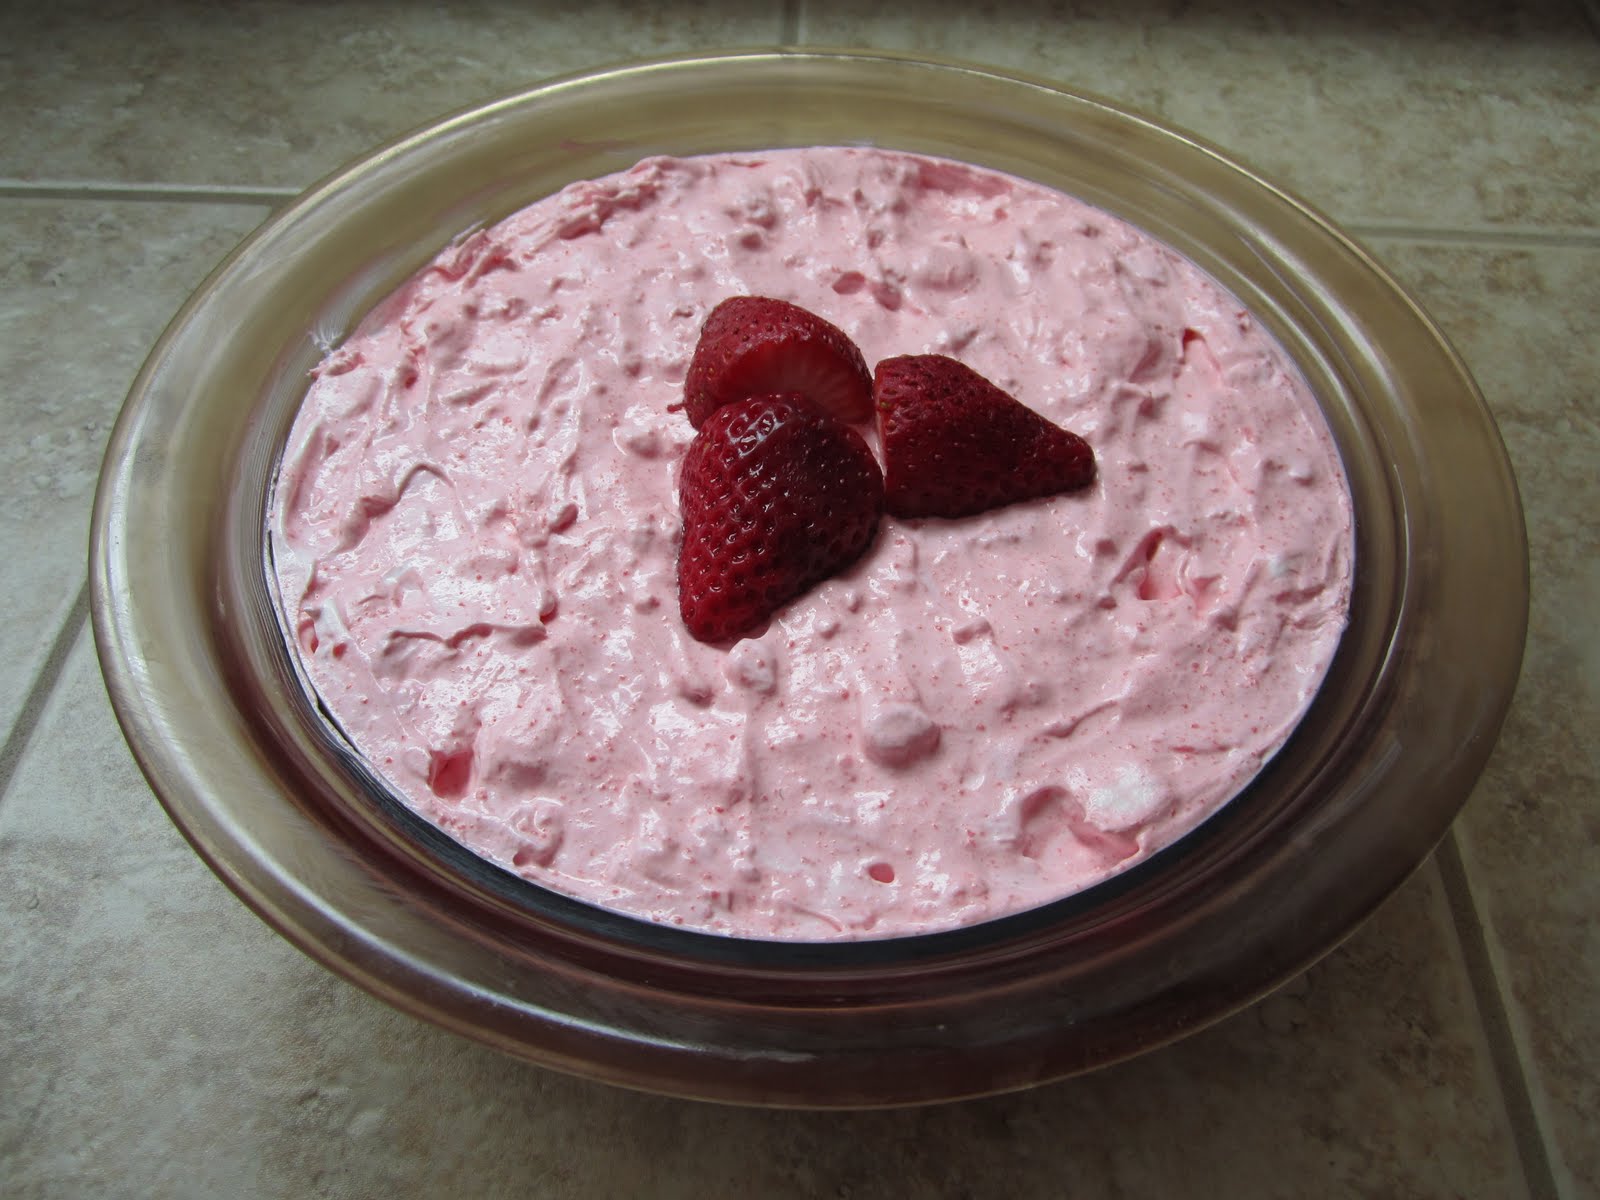 Inspiration 35 of Strawberry Jello Cottage Cheese Salad